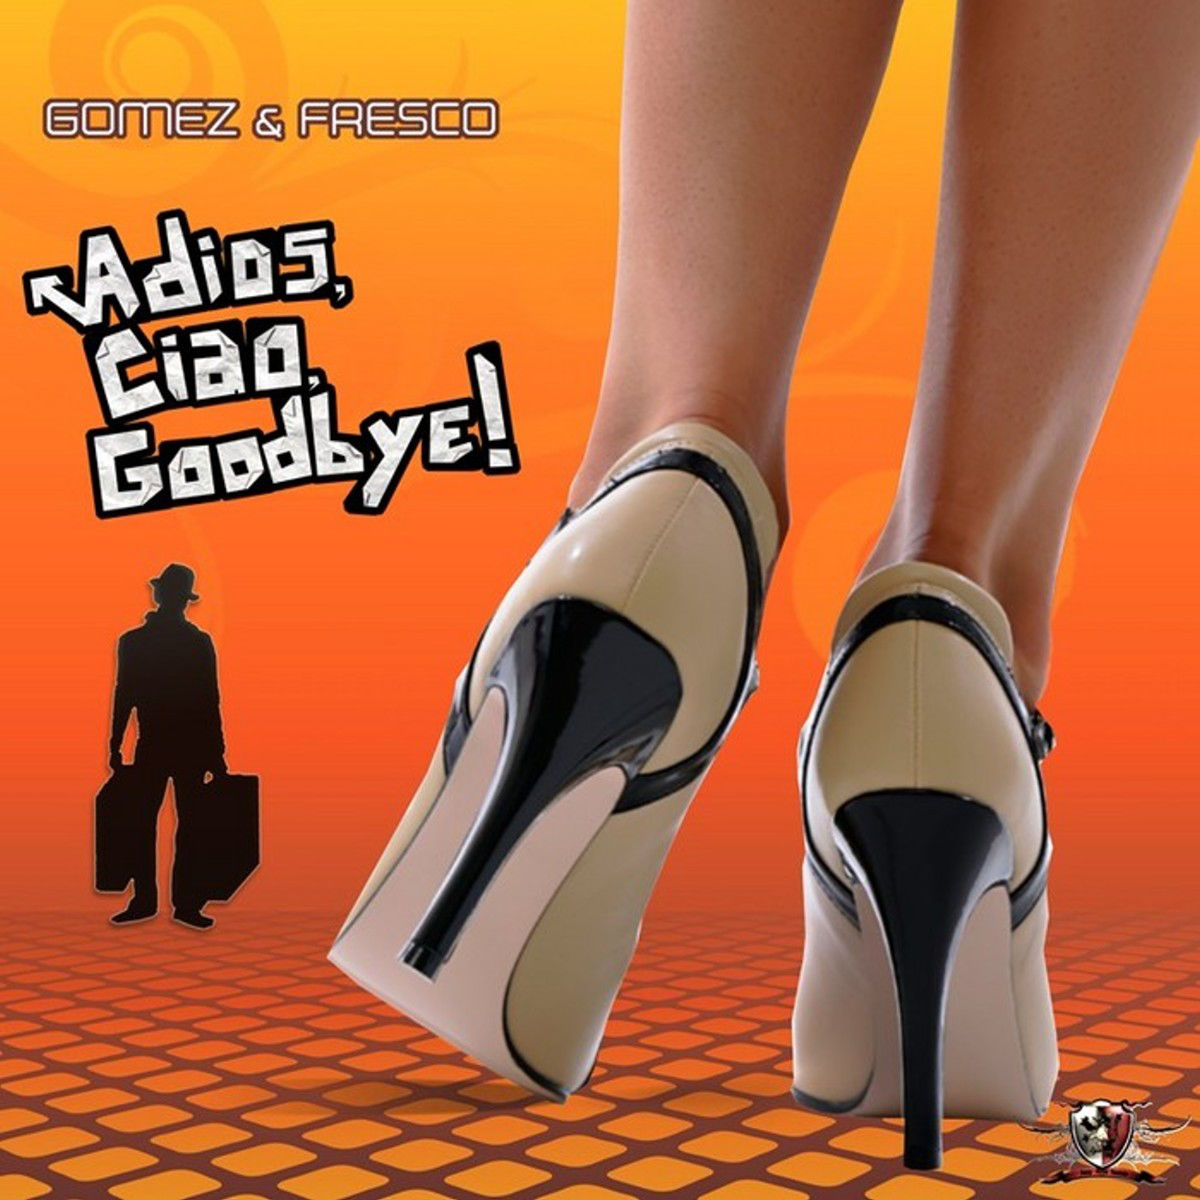 Gomes & Fresco - Adios, Ciao Goodbye (Jesse Rivera Remix) [Feat. Marisa Lopez] фото